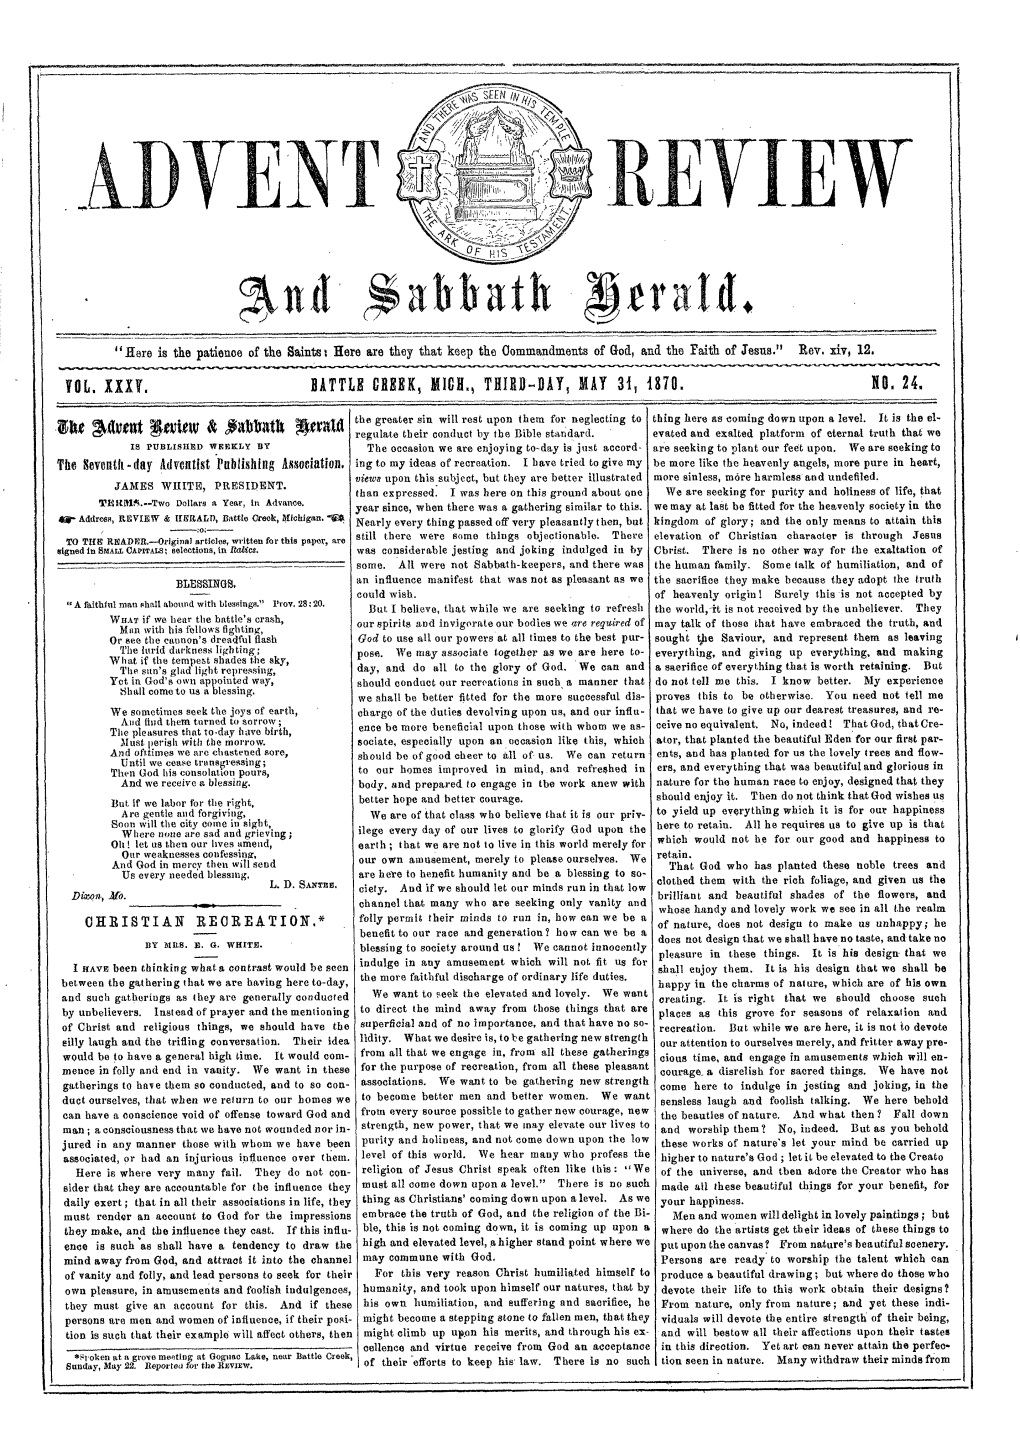 Tol. Xxxii. Battle Creek, Micr., Third-Day, May 31, 1870. No. 24